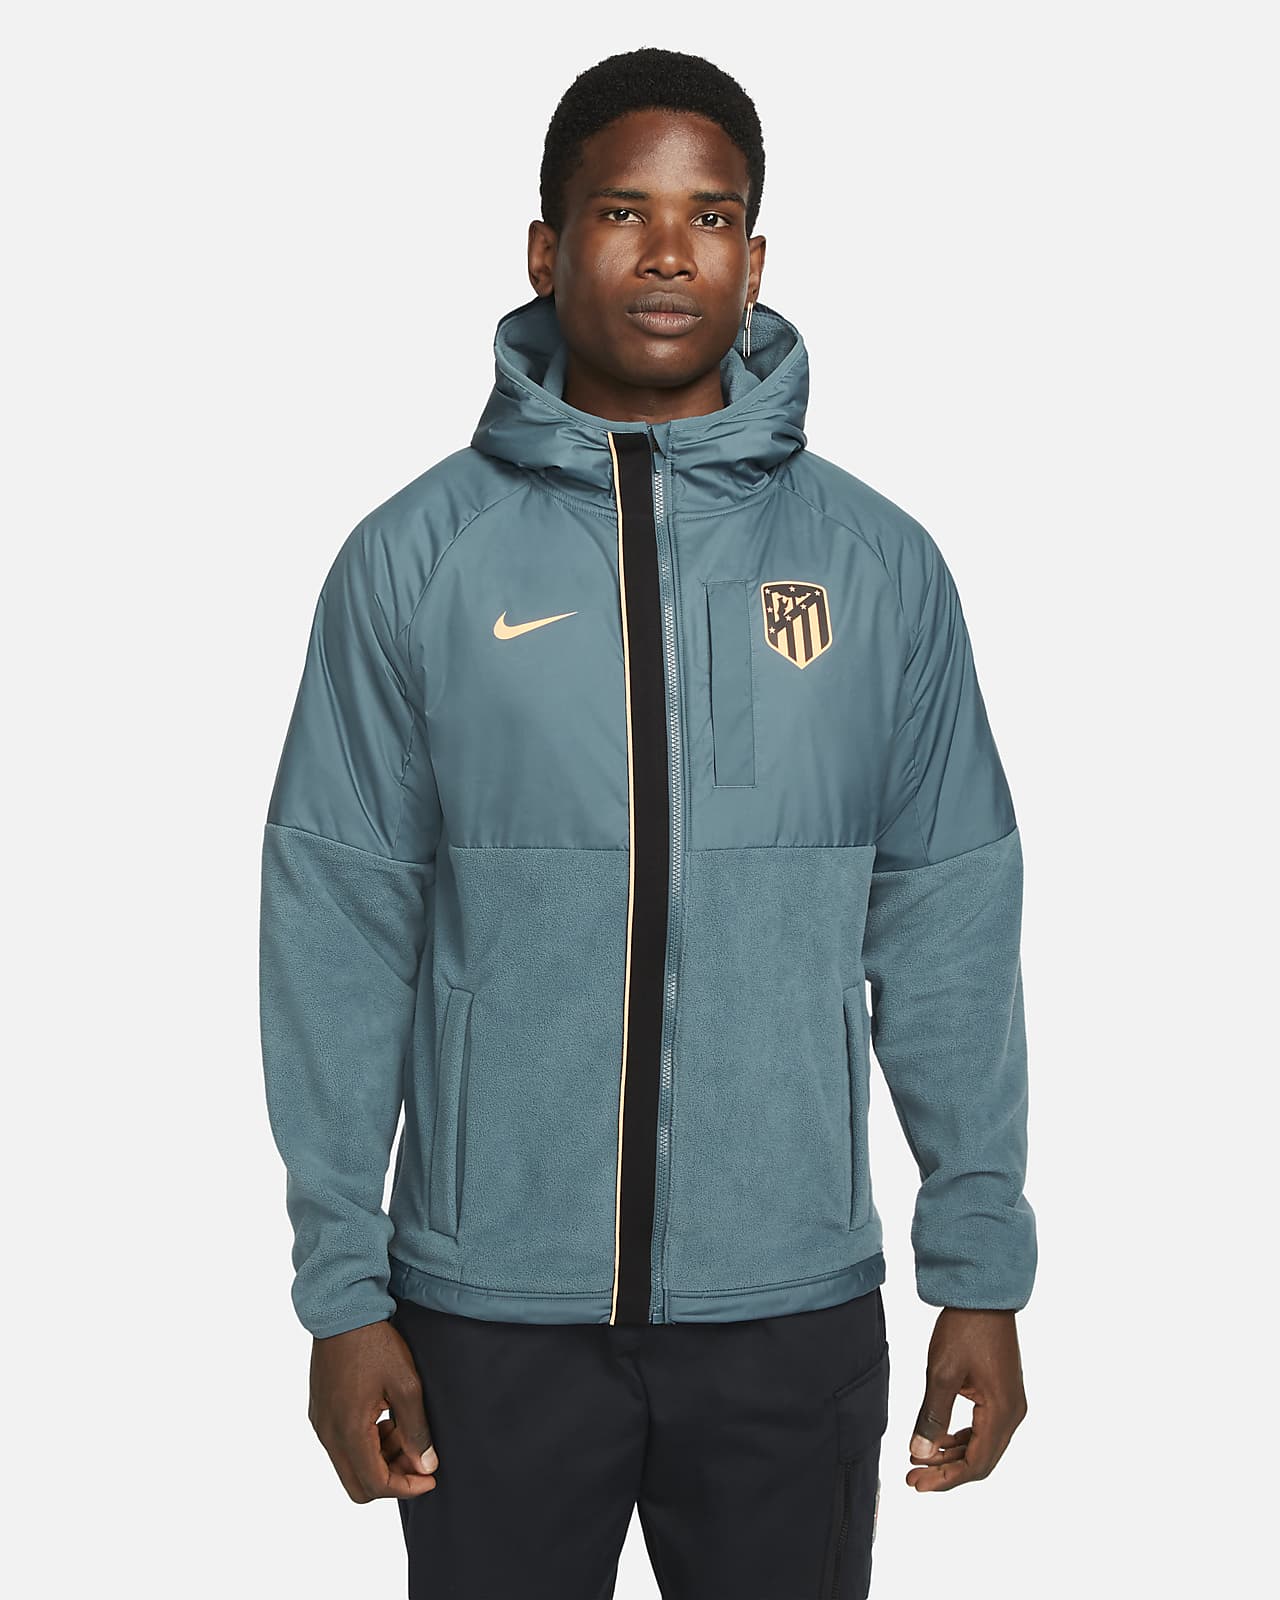 Becks Baan manager Atlético Madrid AWF Men's Winterized Full-Zip Football Jacket. Nike LU